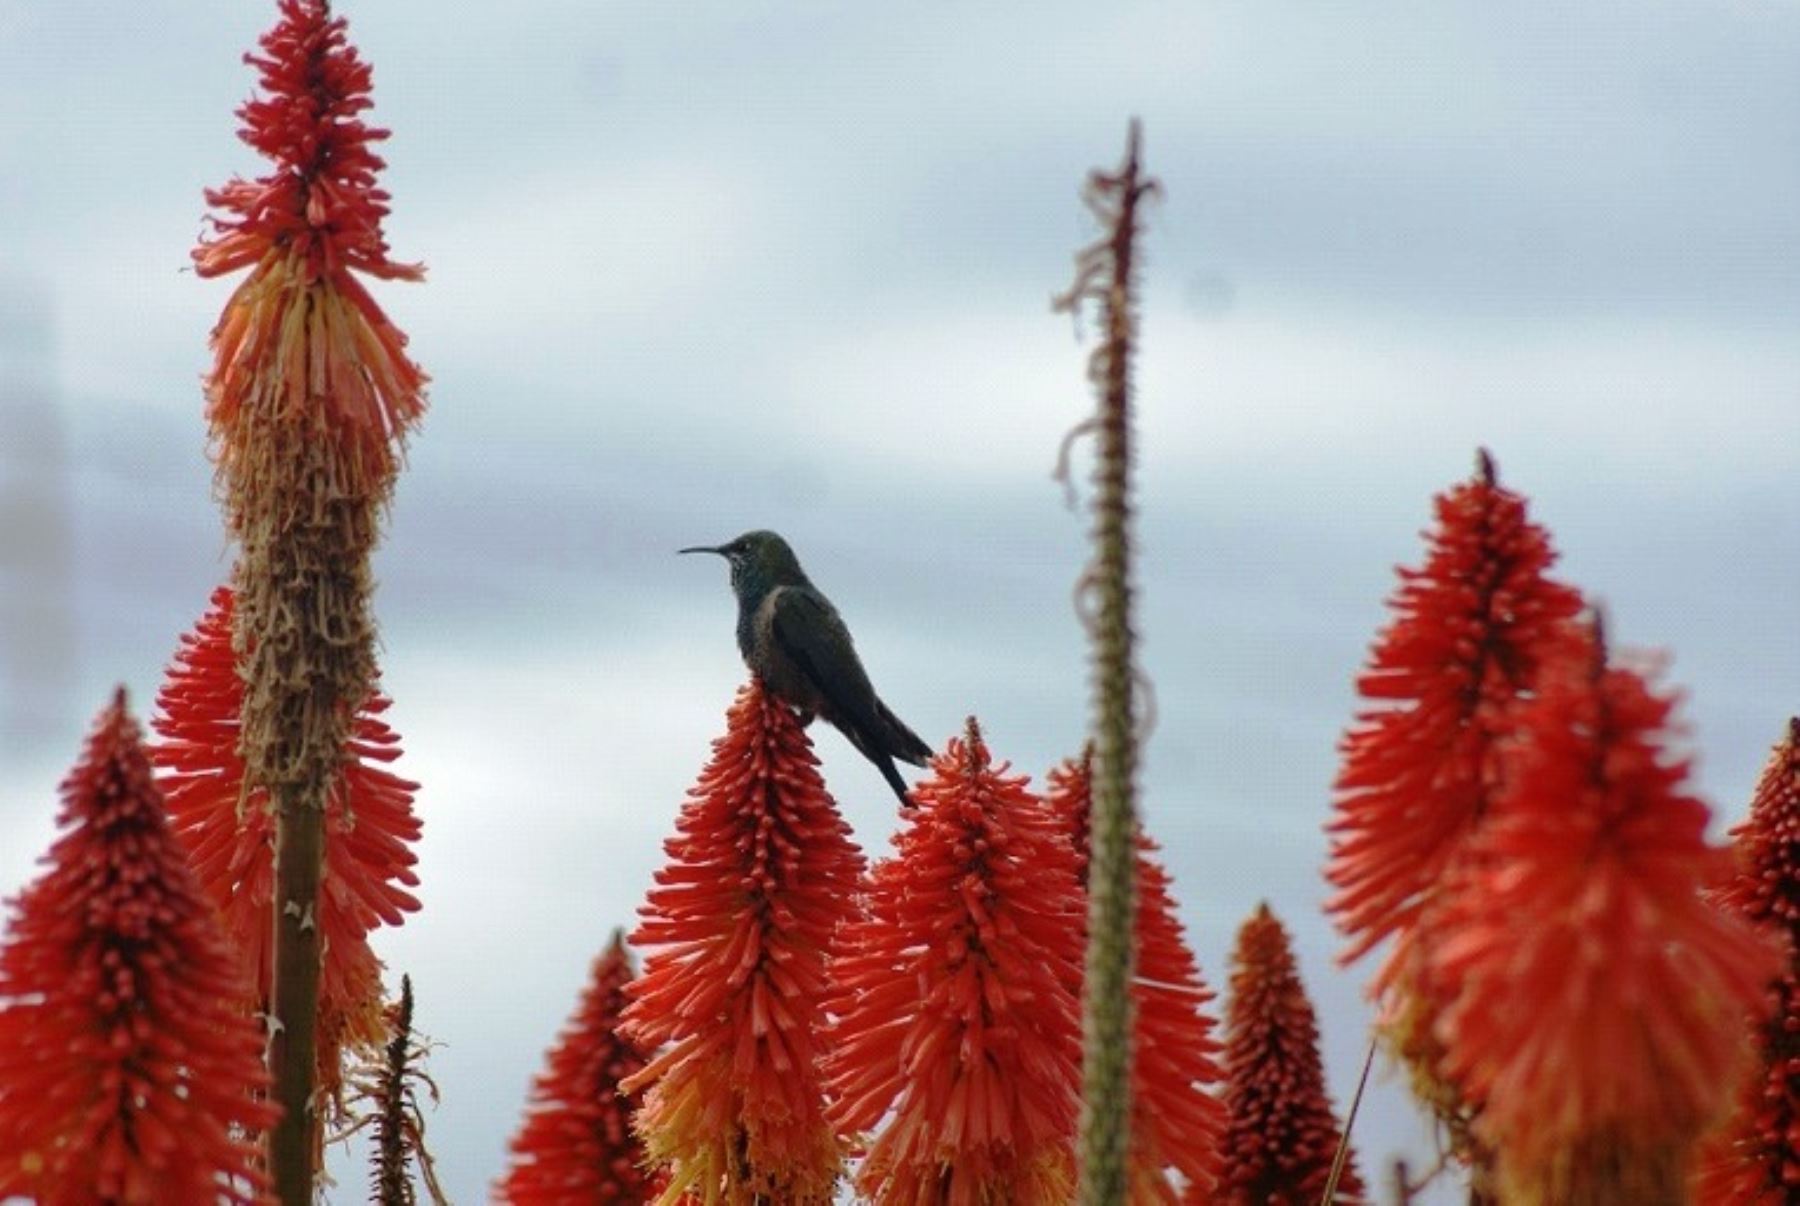 Reserva Nacional de Junín es reconocida como zona para observación de aves. Foto: ANDINA/Difusión.